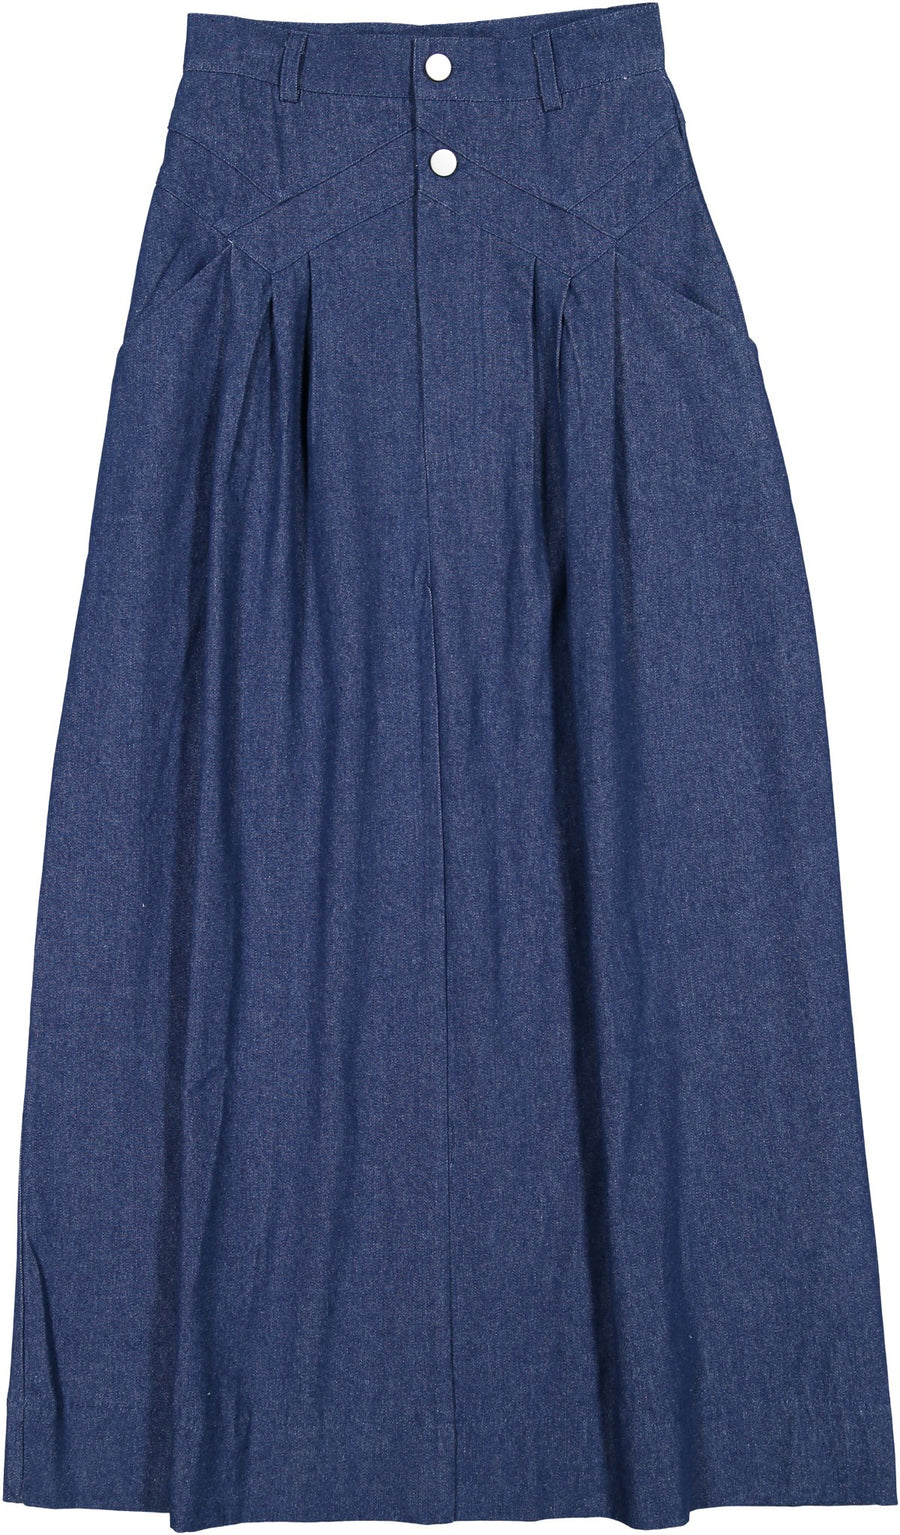 Zig Zag Detailed Maxi Skirt - Denim Blue - Posh New York